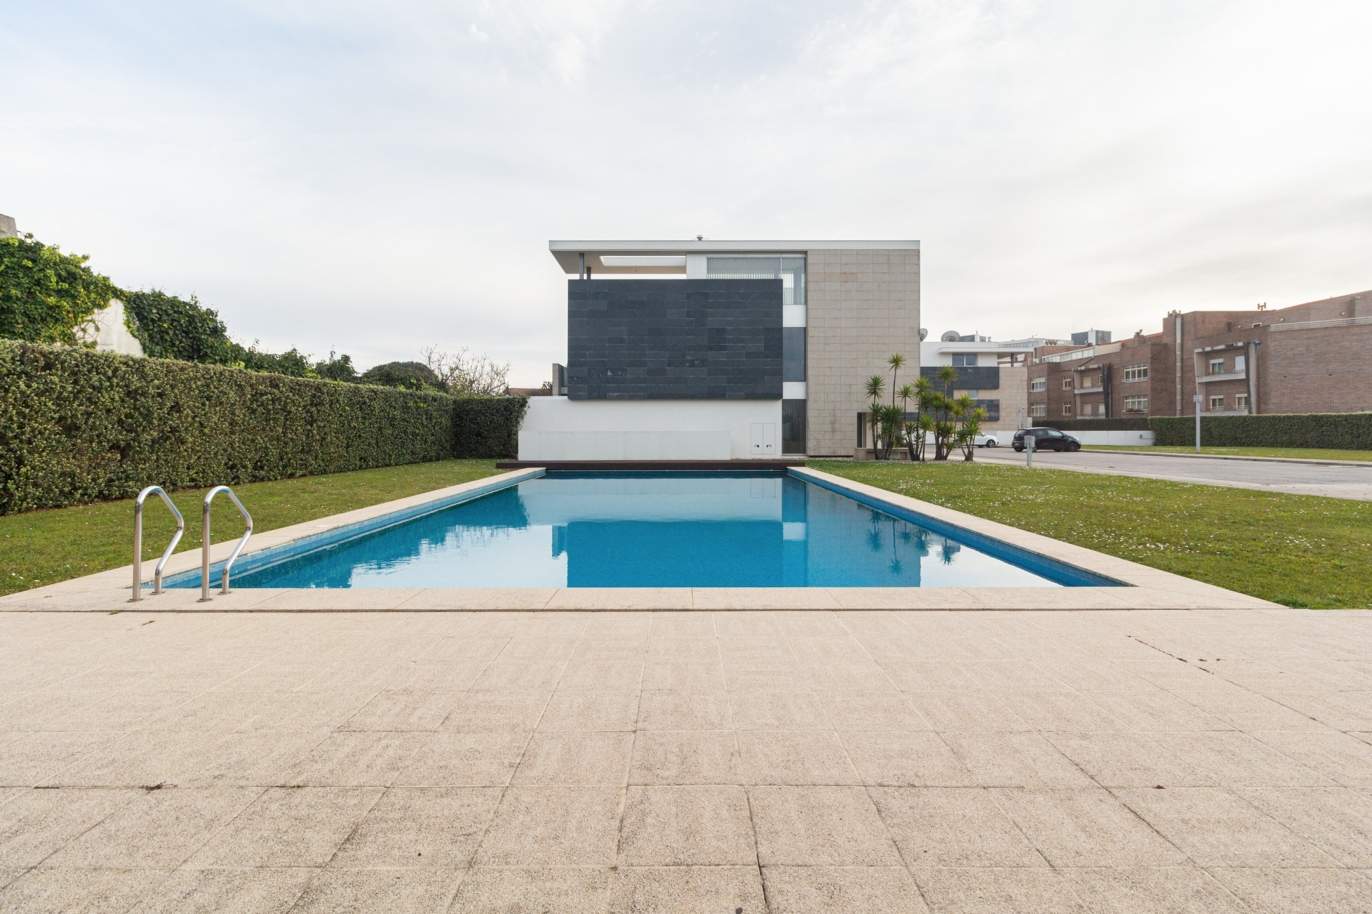 Verkauf: Villa mit Pool und Terrasse, in Strandnähe in Gulpilhares, Vila Nova de Gaia, Portugal_194714